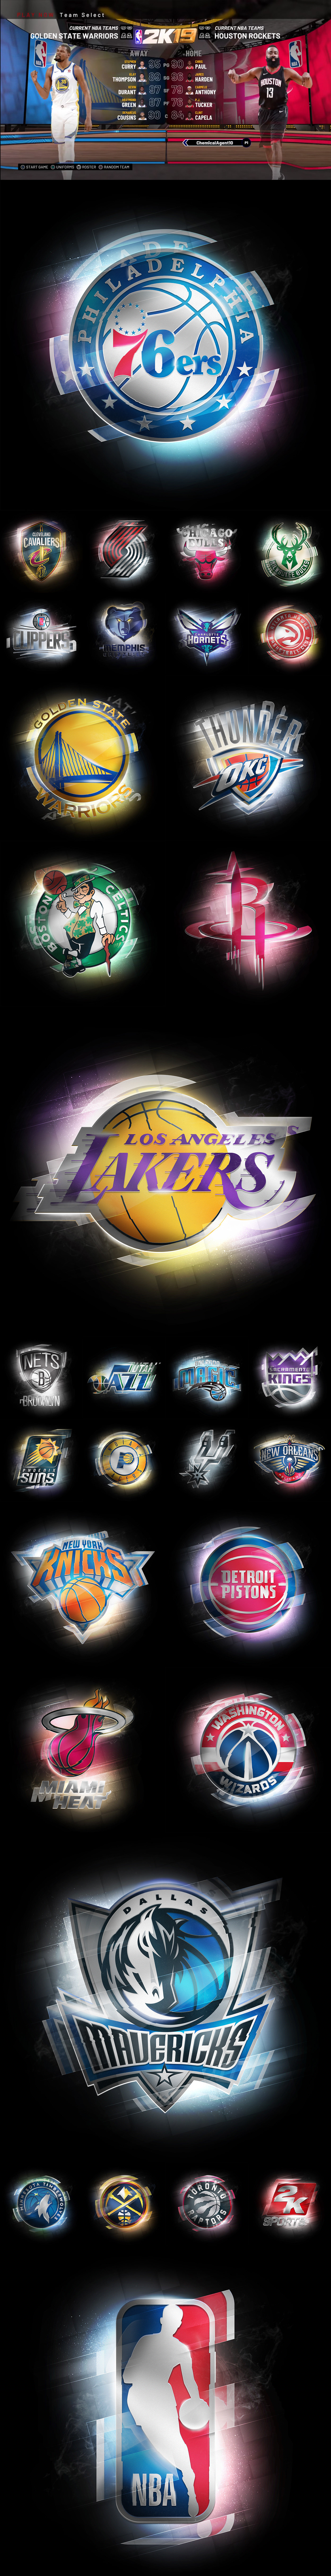 basketball Kobe Bryant Lee Olsen Logo Design mural art NBA NBA 2K NBA 2K19 NBA Art Video Games